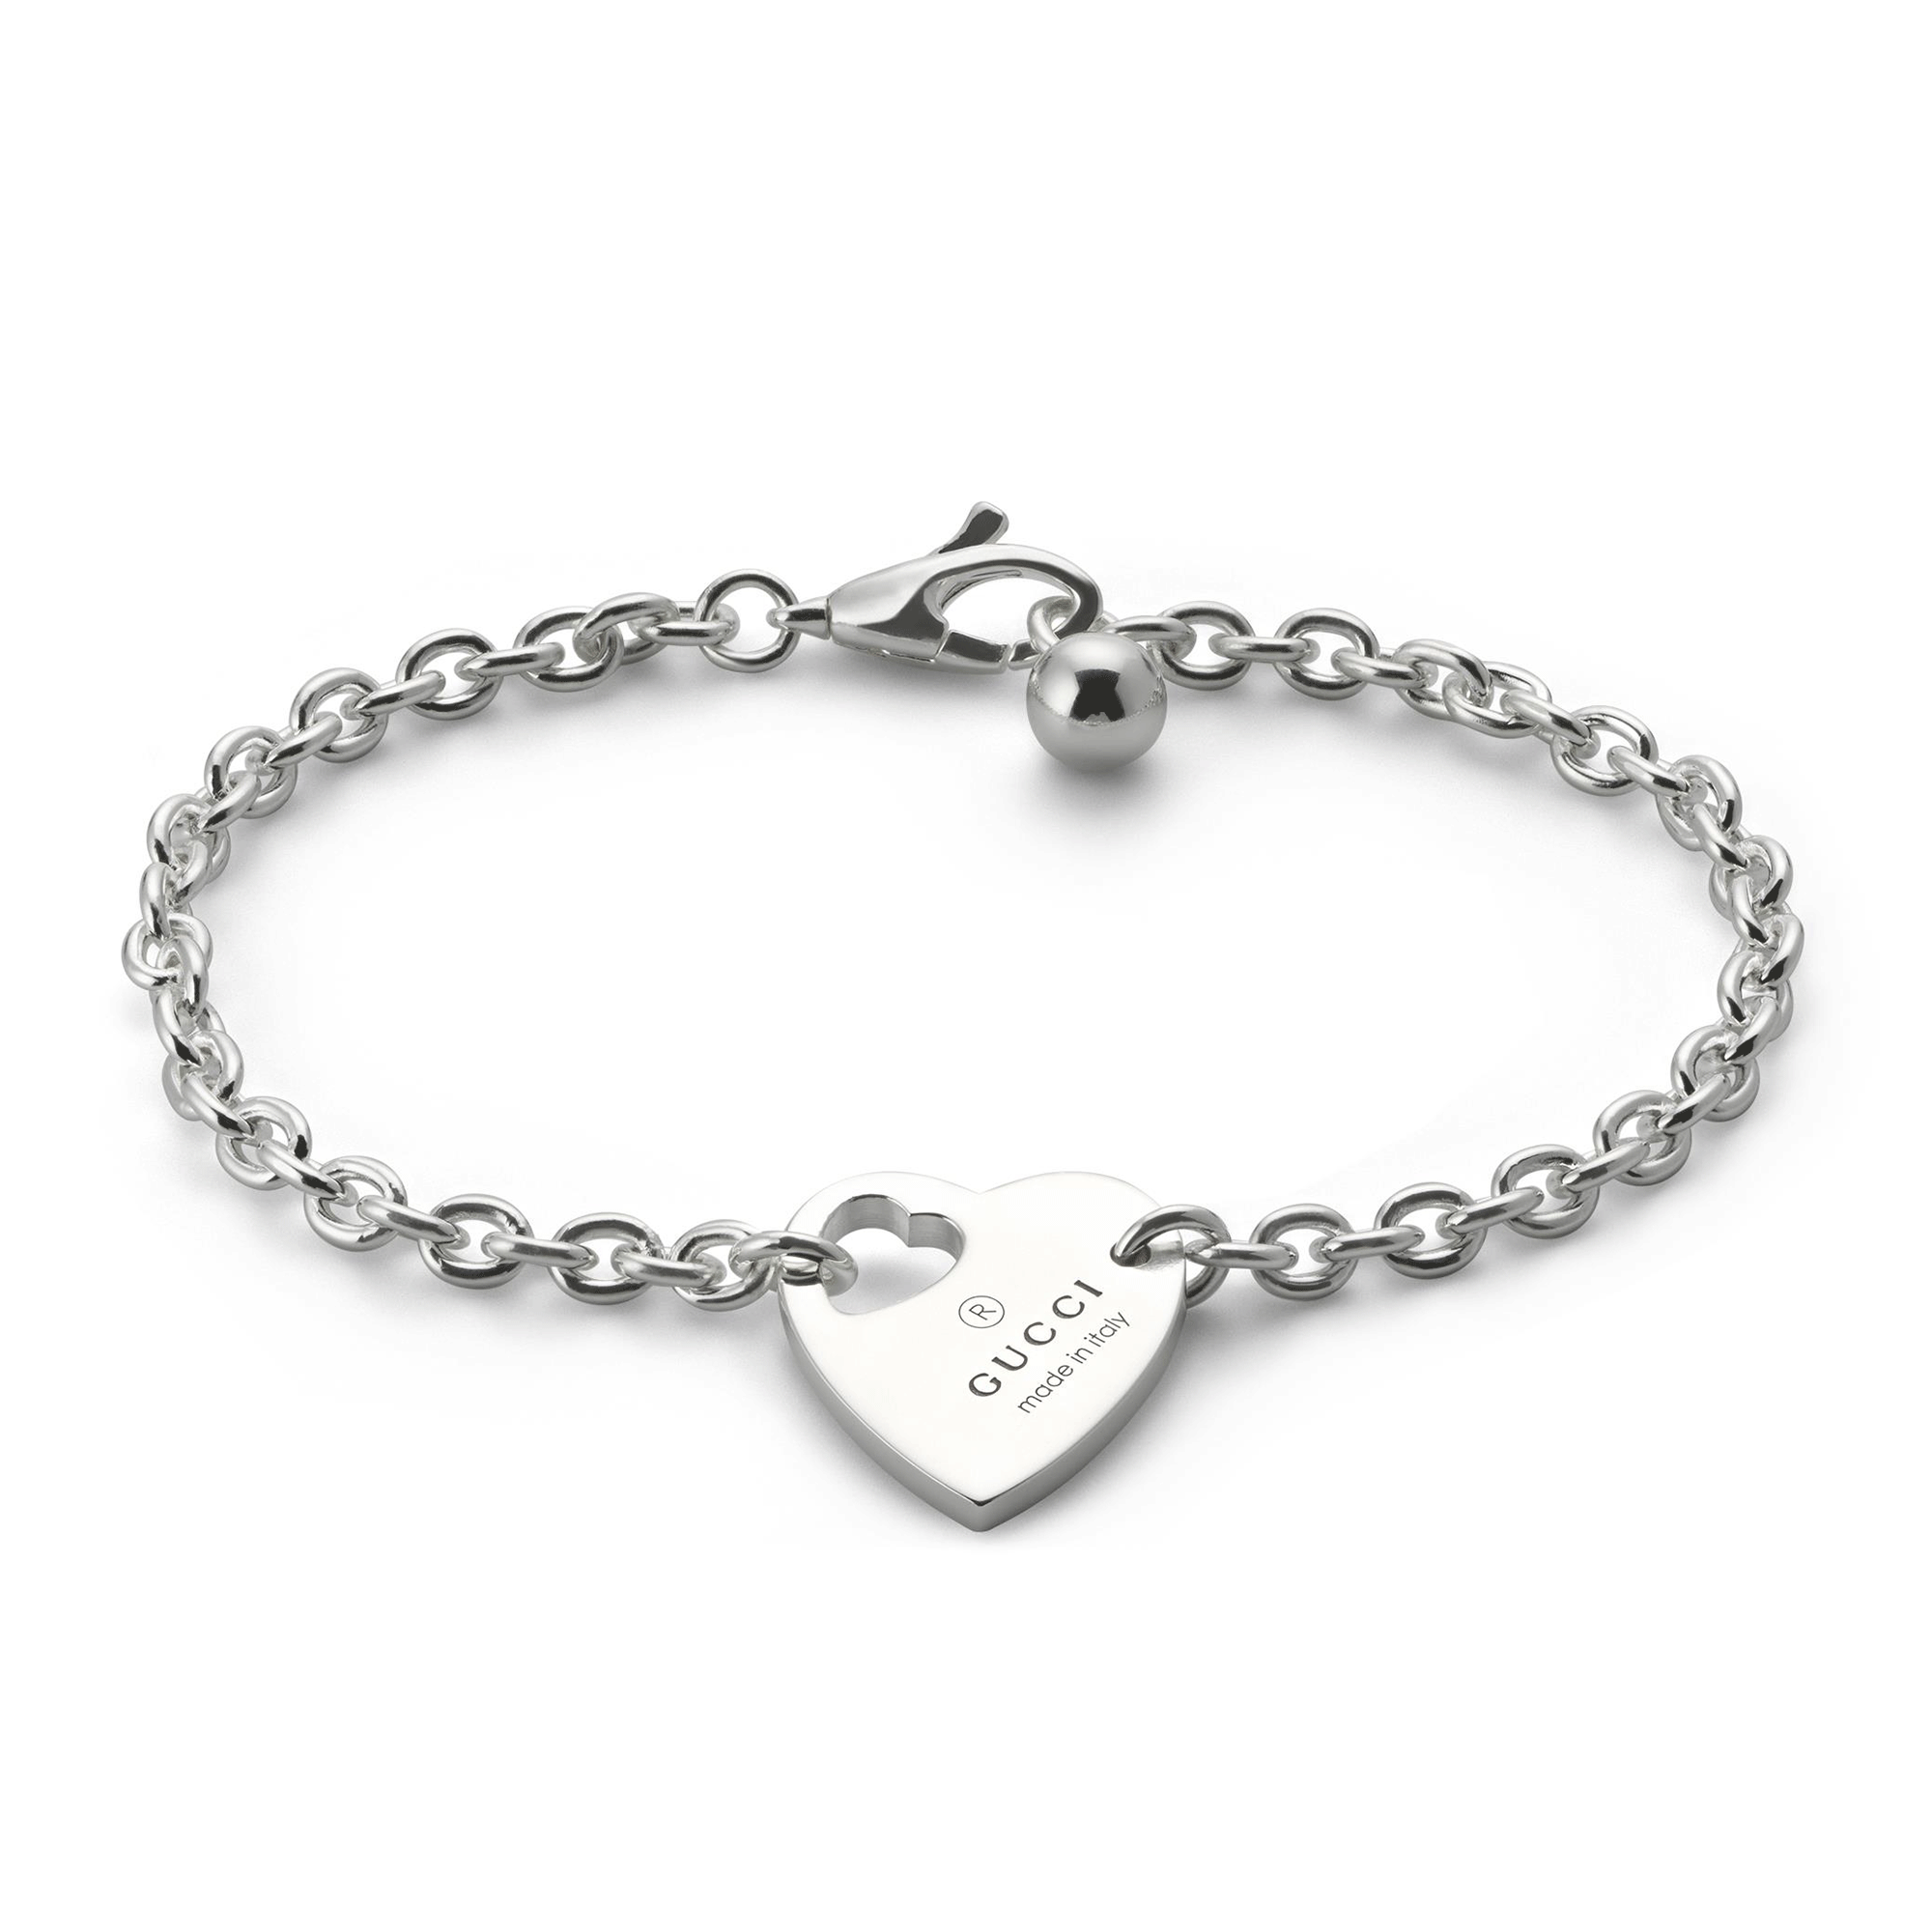 Trademark Sterling Silver Heart Bracelet